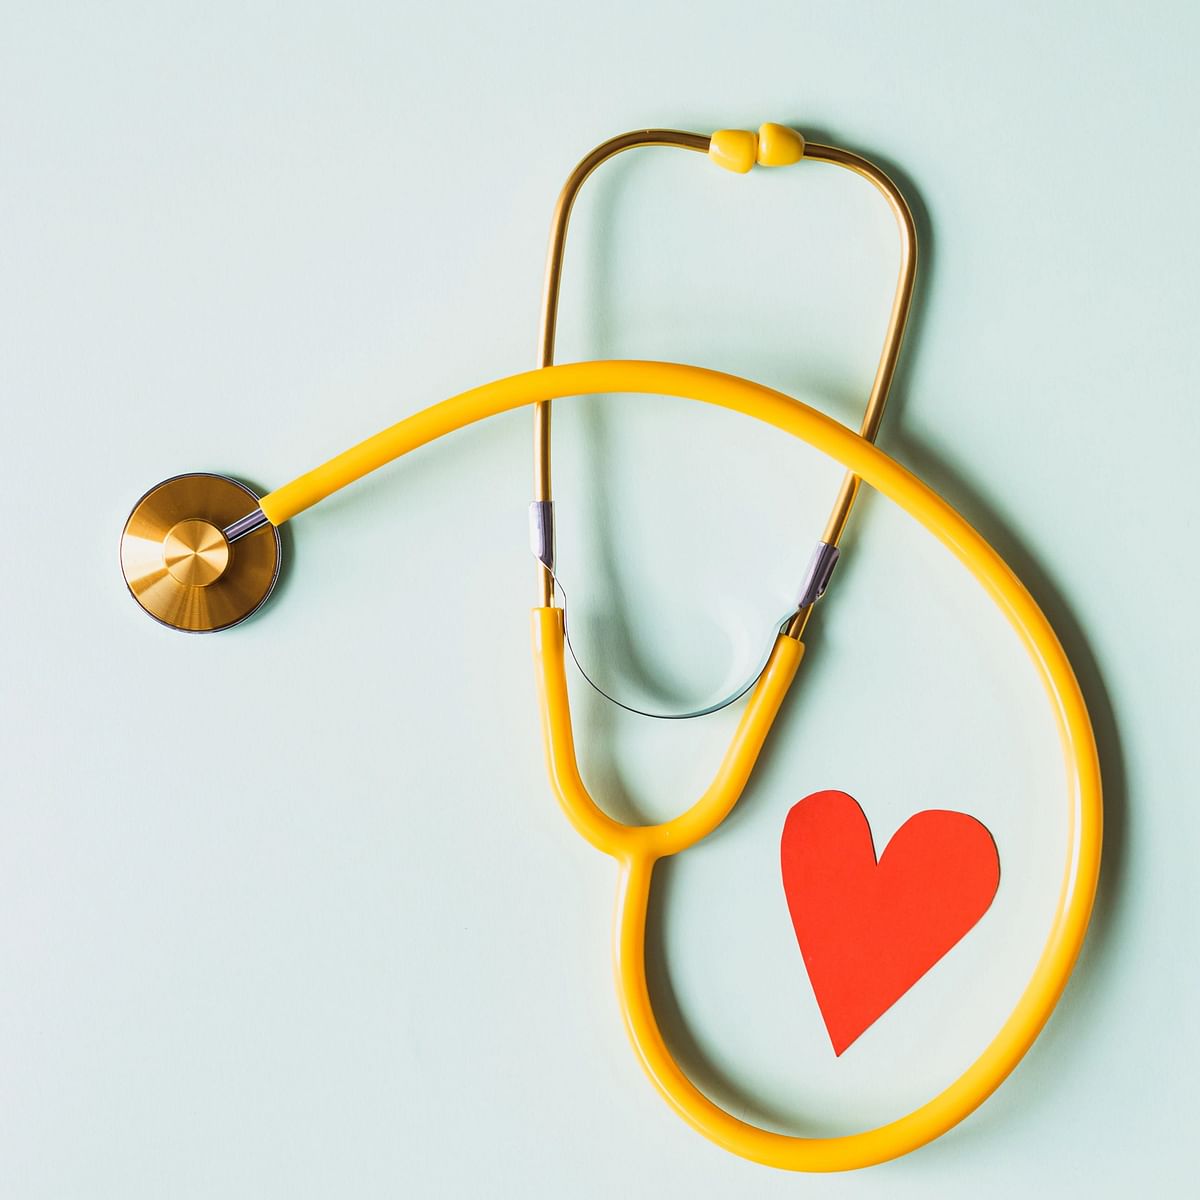 Heart Care (Representational Image)